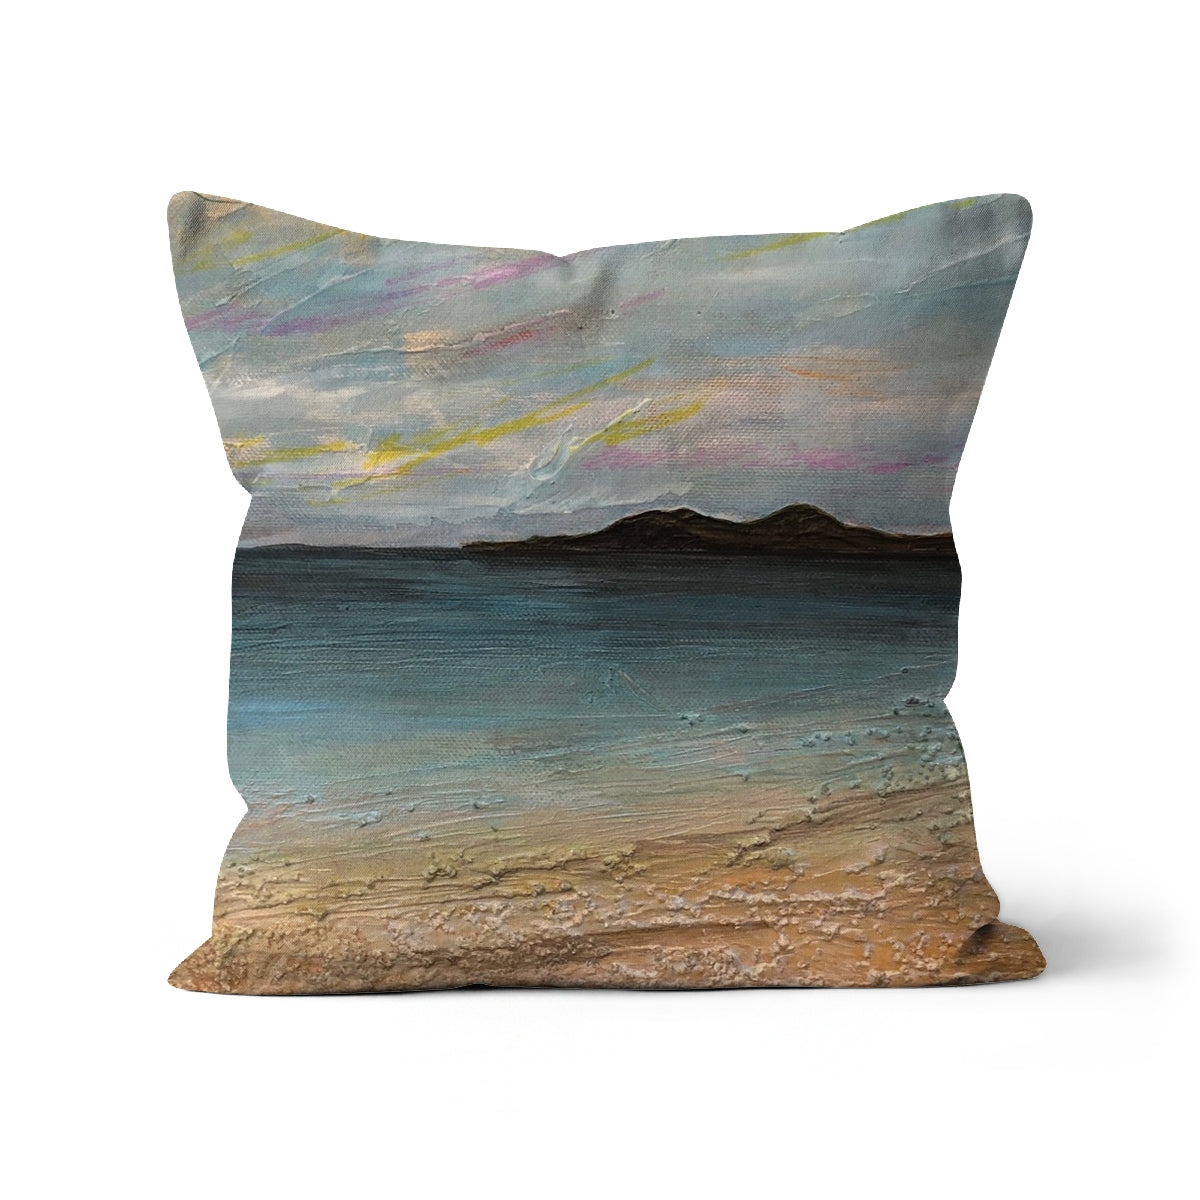 Garrynamonie Beach South Uist Art Gifts Cushion-Cushions-Hebridean Islands Art Gallery-Linen-18"x18"-Paintings, Prints, Homeware, Art Gifts From Scotland By Scottish Artist Kevin Hunter